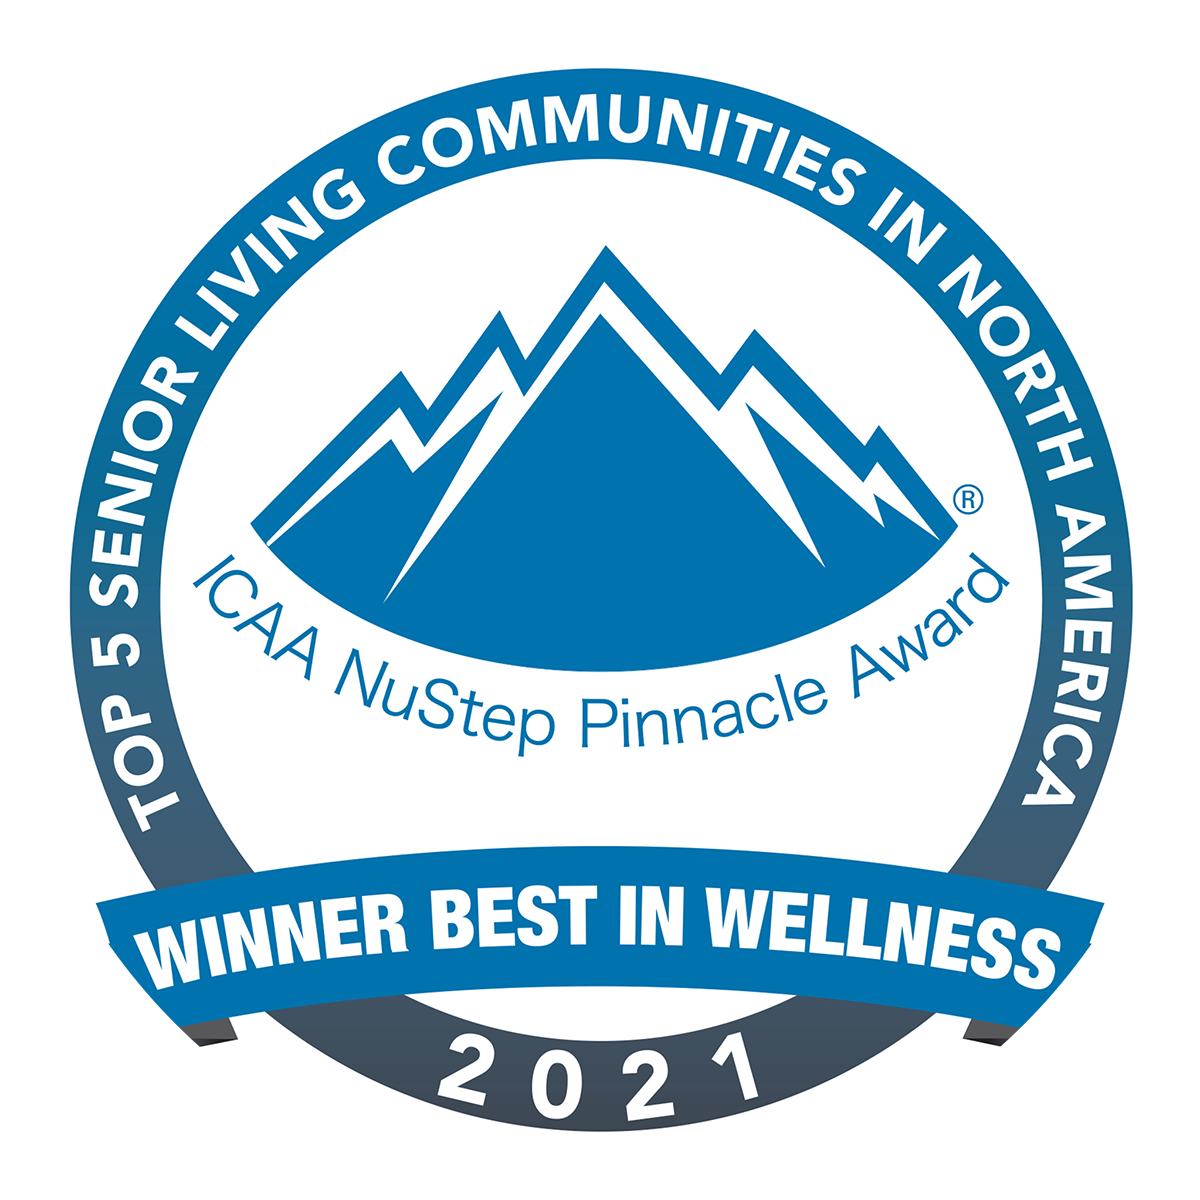 Winner best in wellness - Top 5 senior living communities in North America - 2021